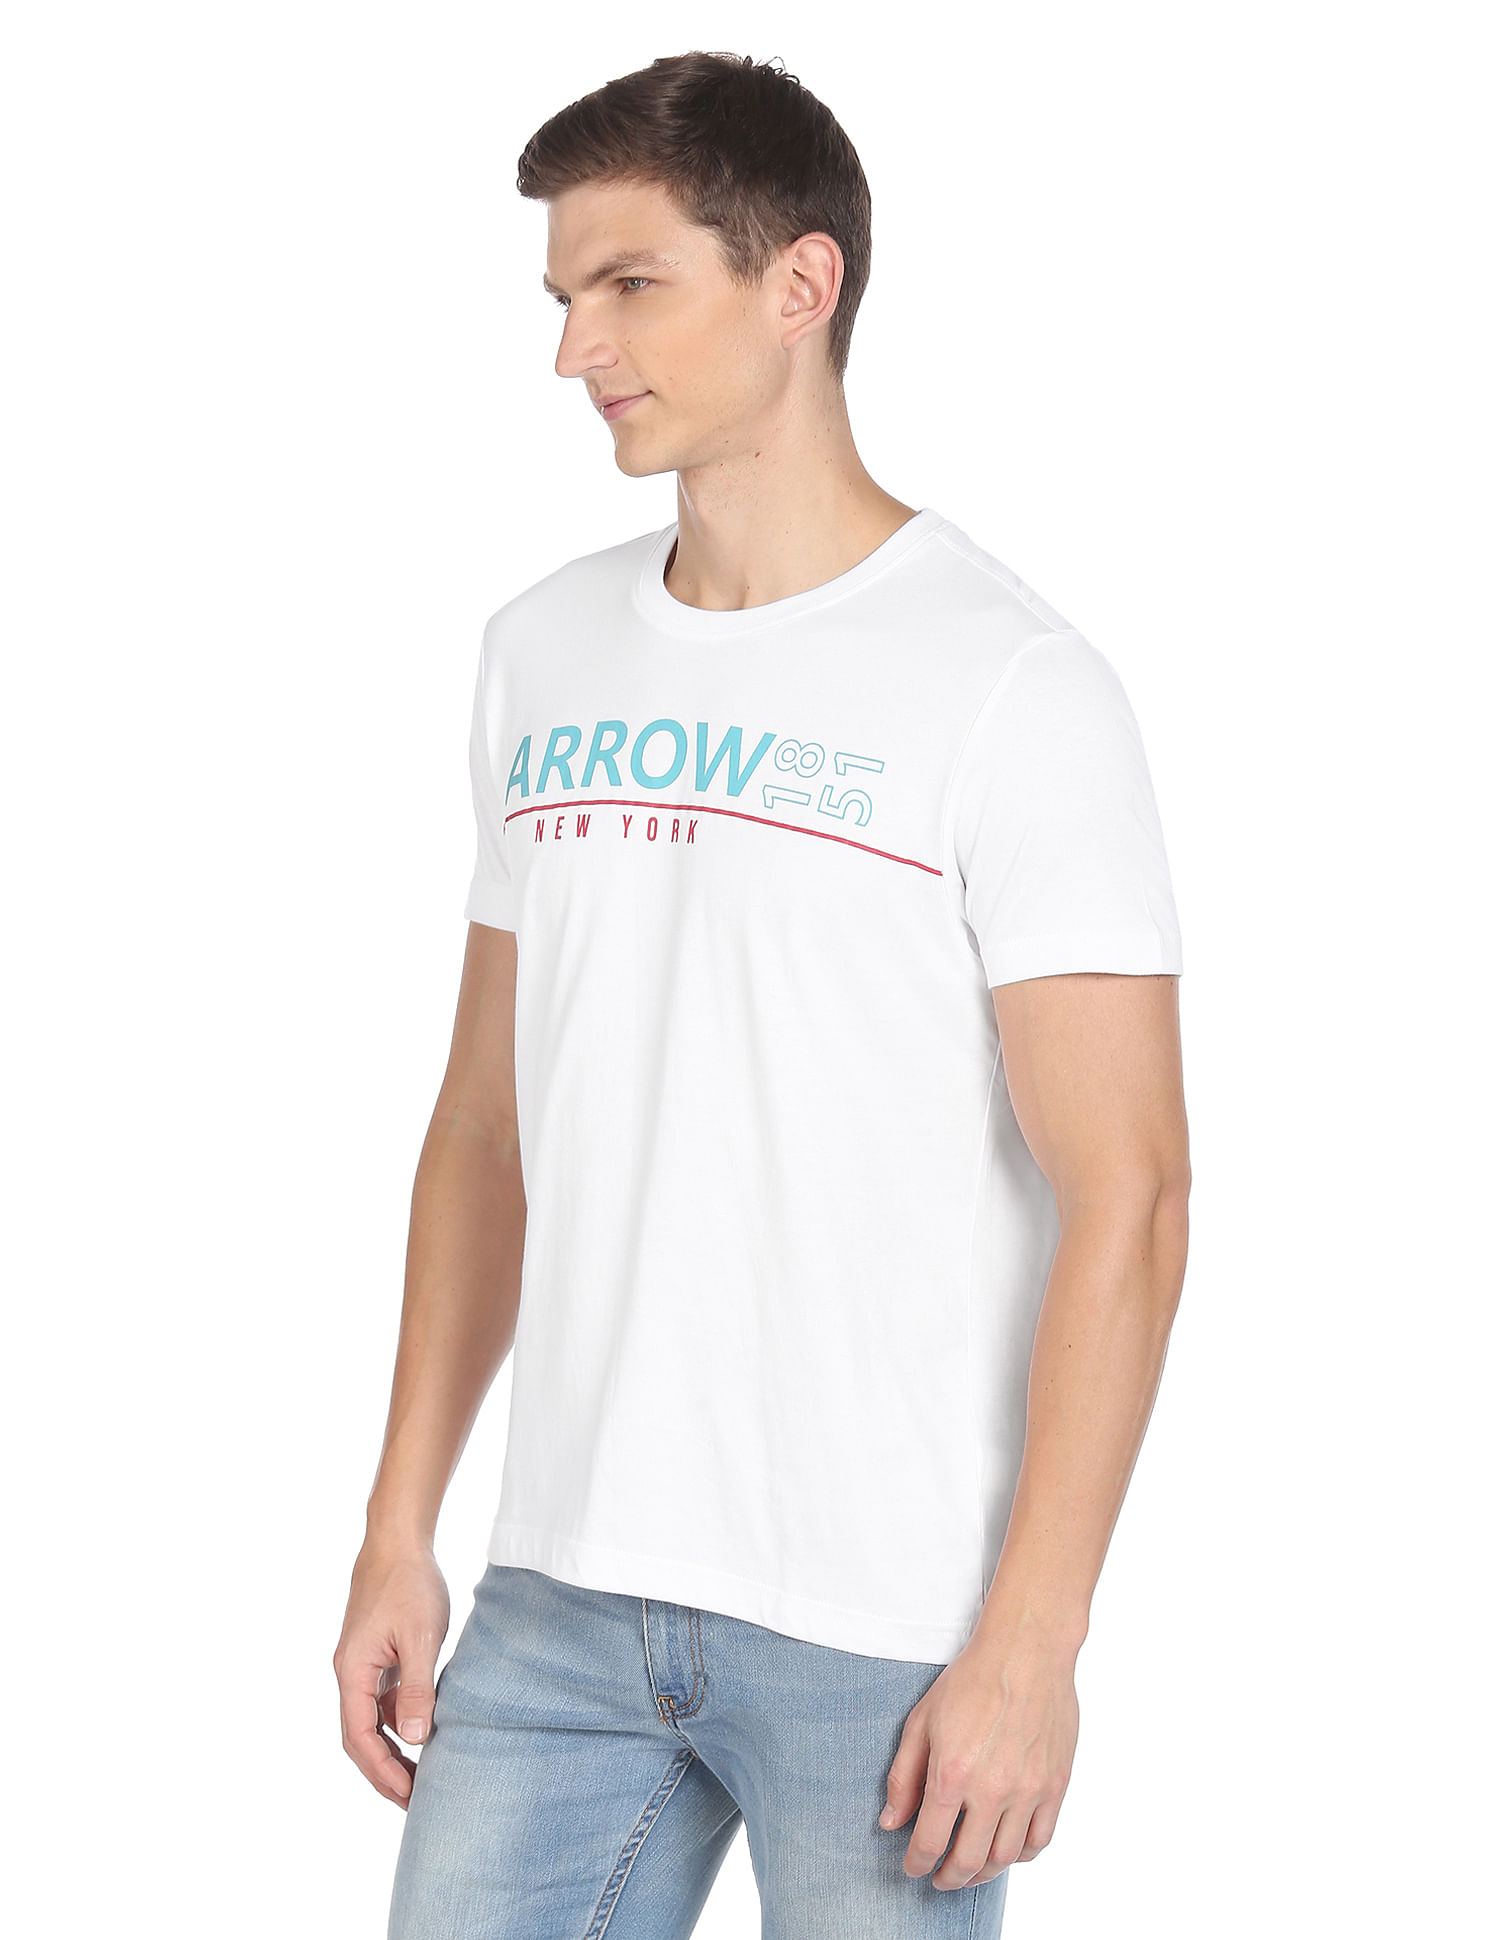 Buy Arrow Sports Men T-Shirt Print White Cotton Brand Pure